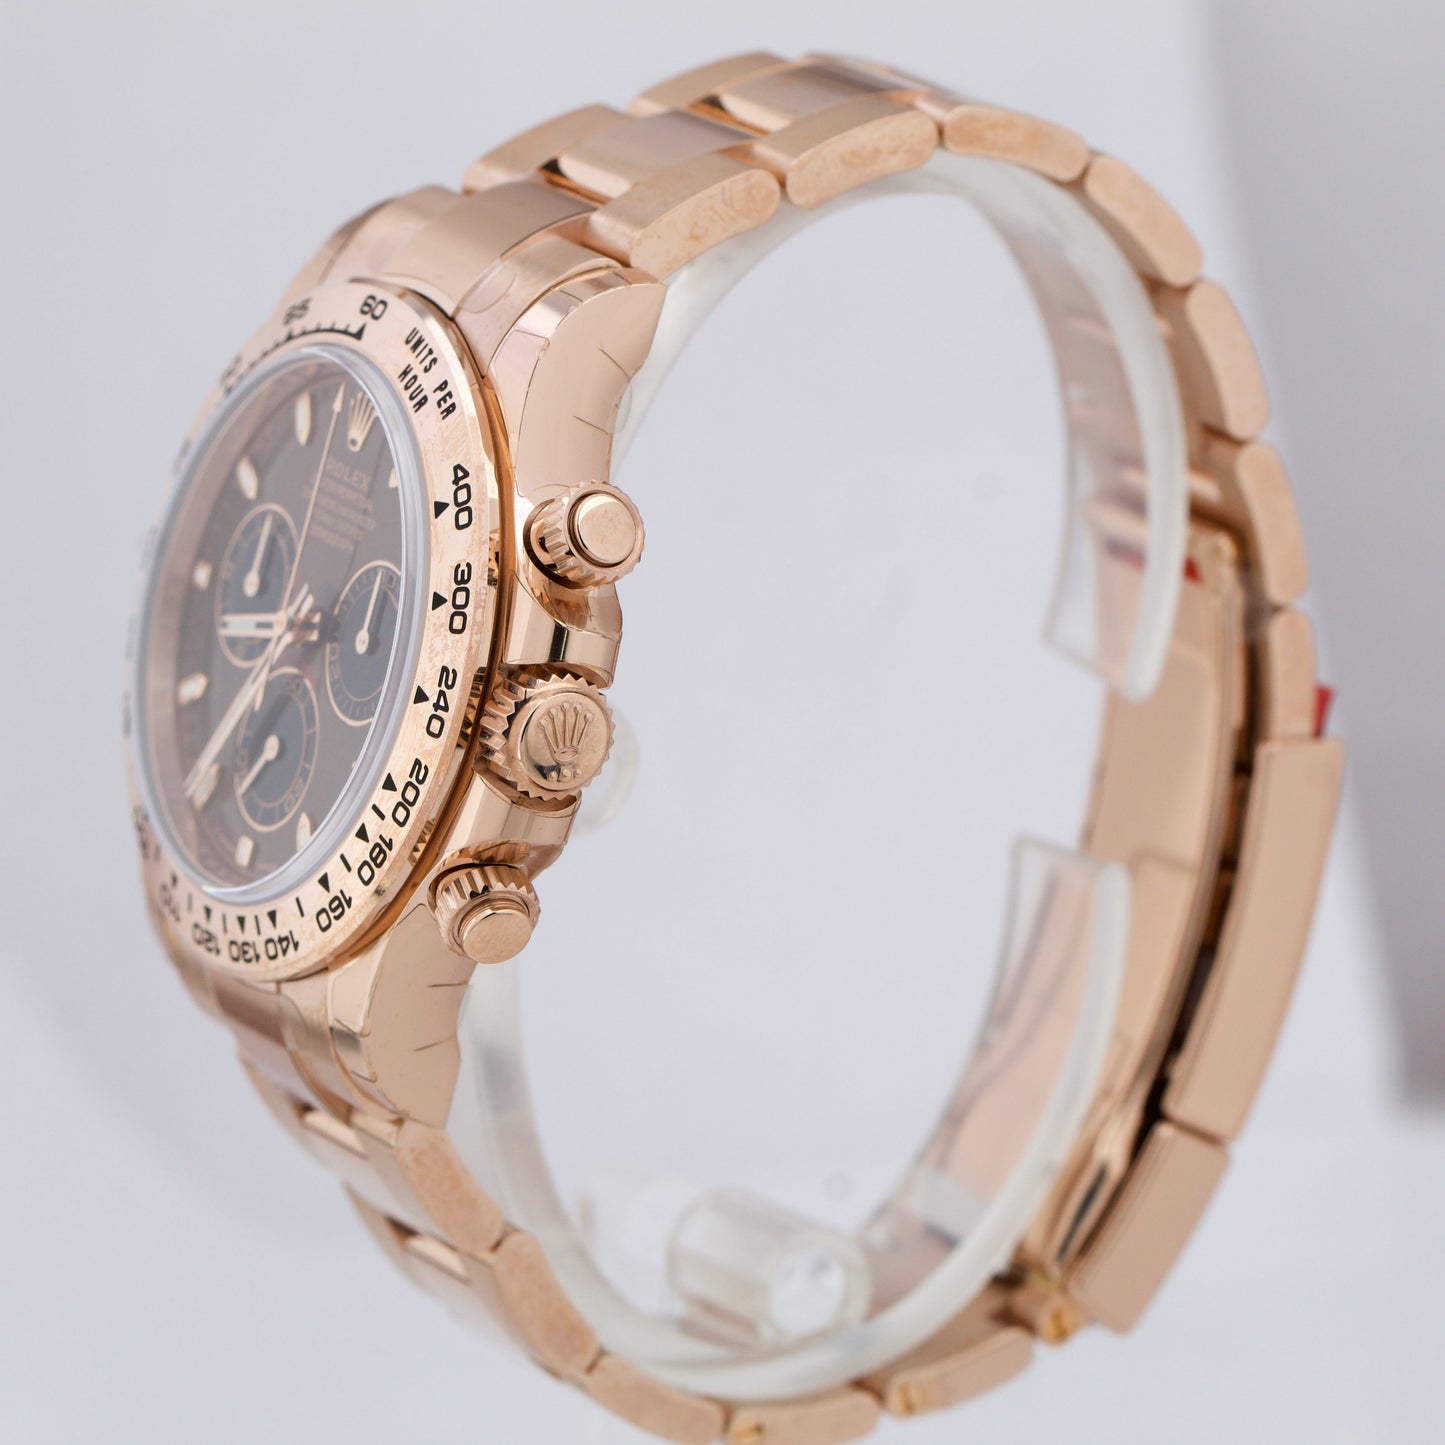 NEW STICKERED Rolex Daytona Cosmograph Chocolate 18K Rose Gold Watch 116505